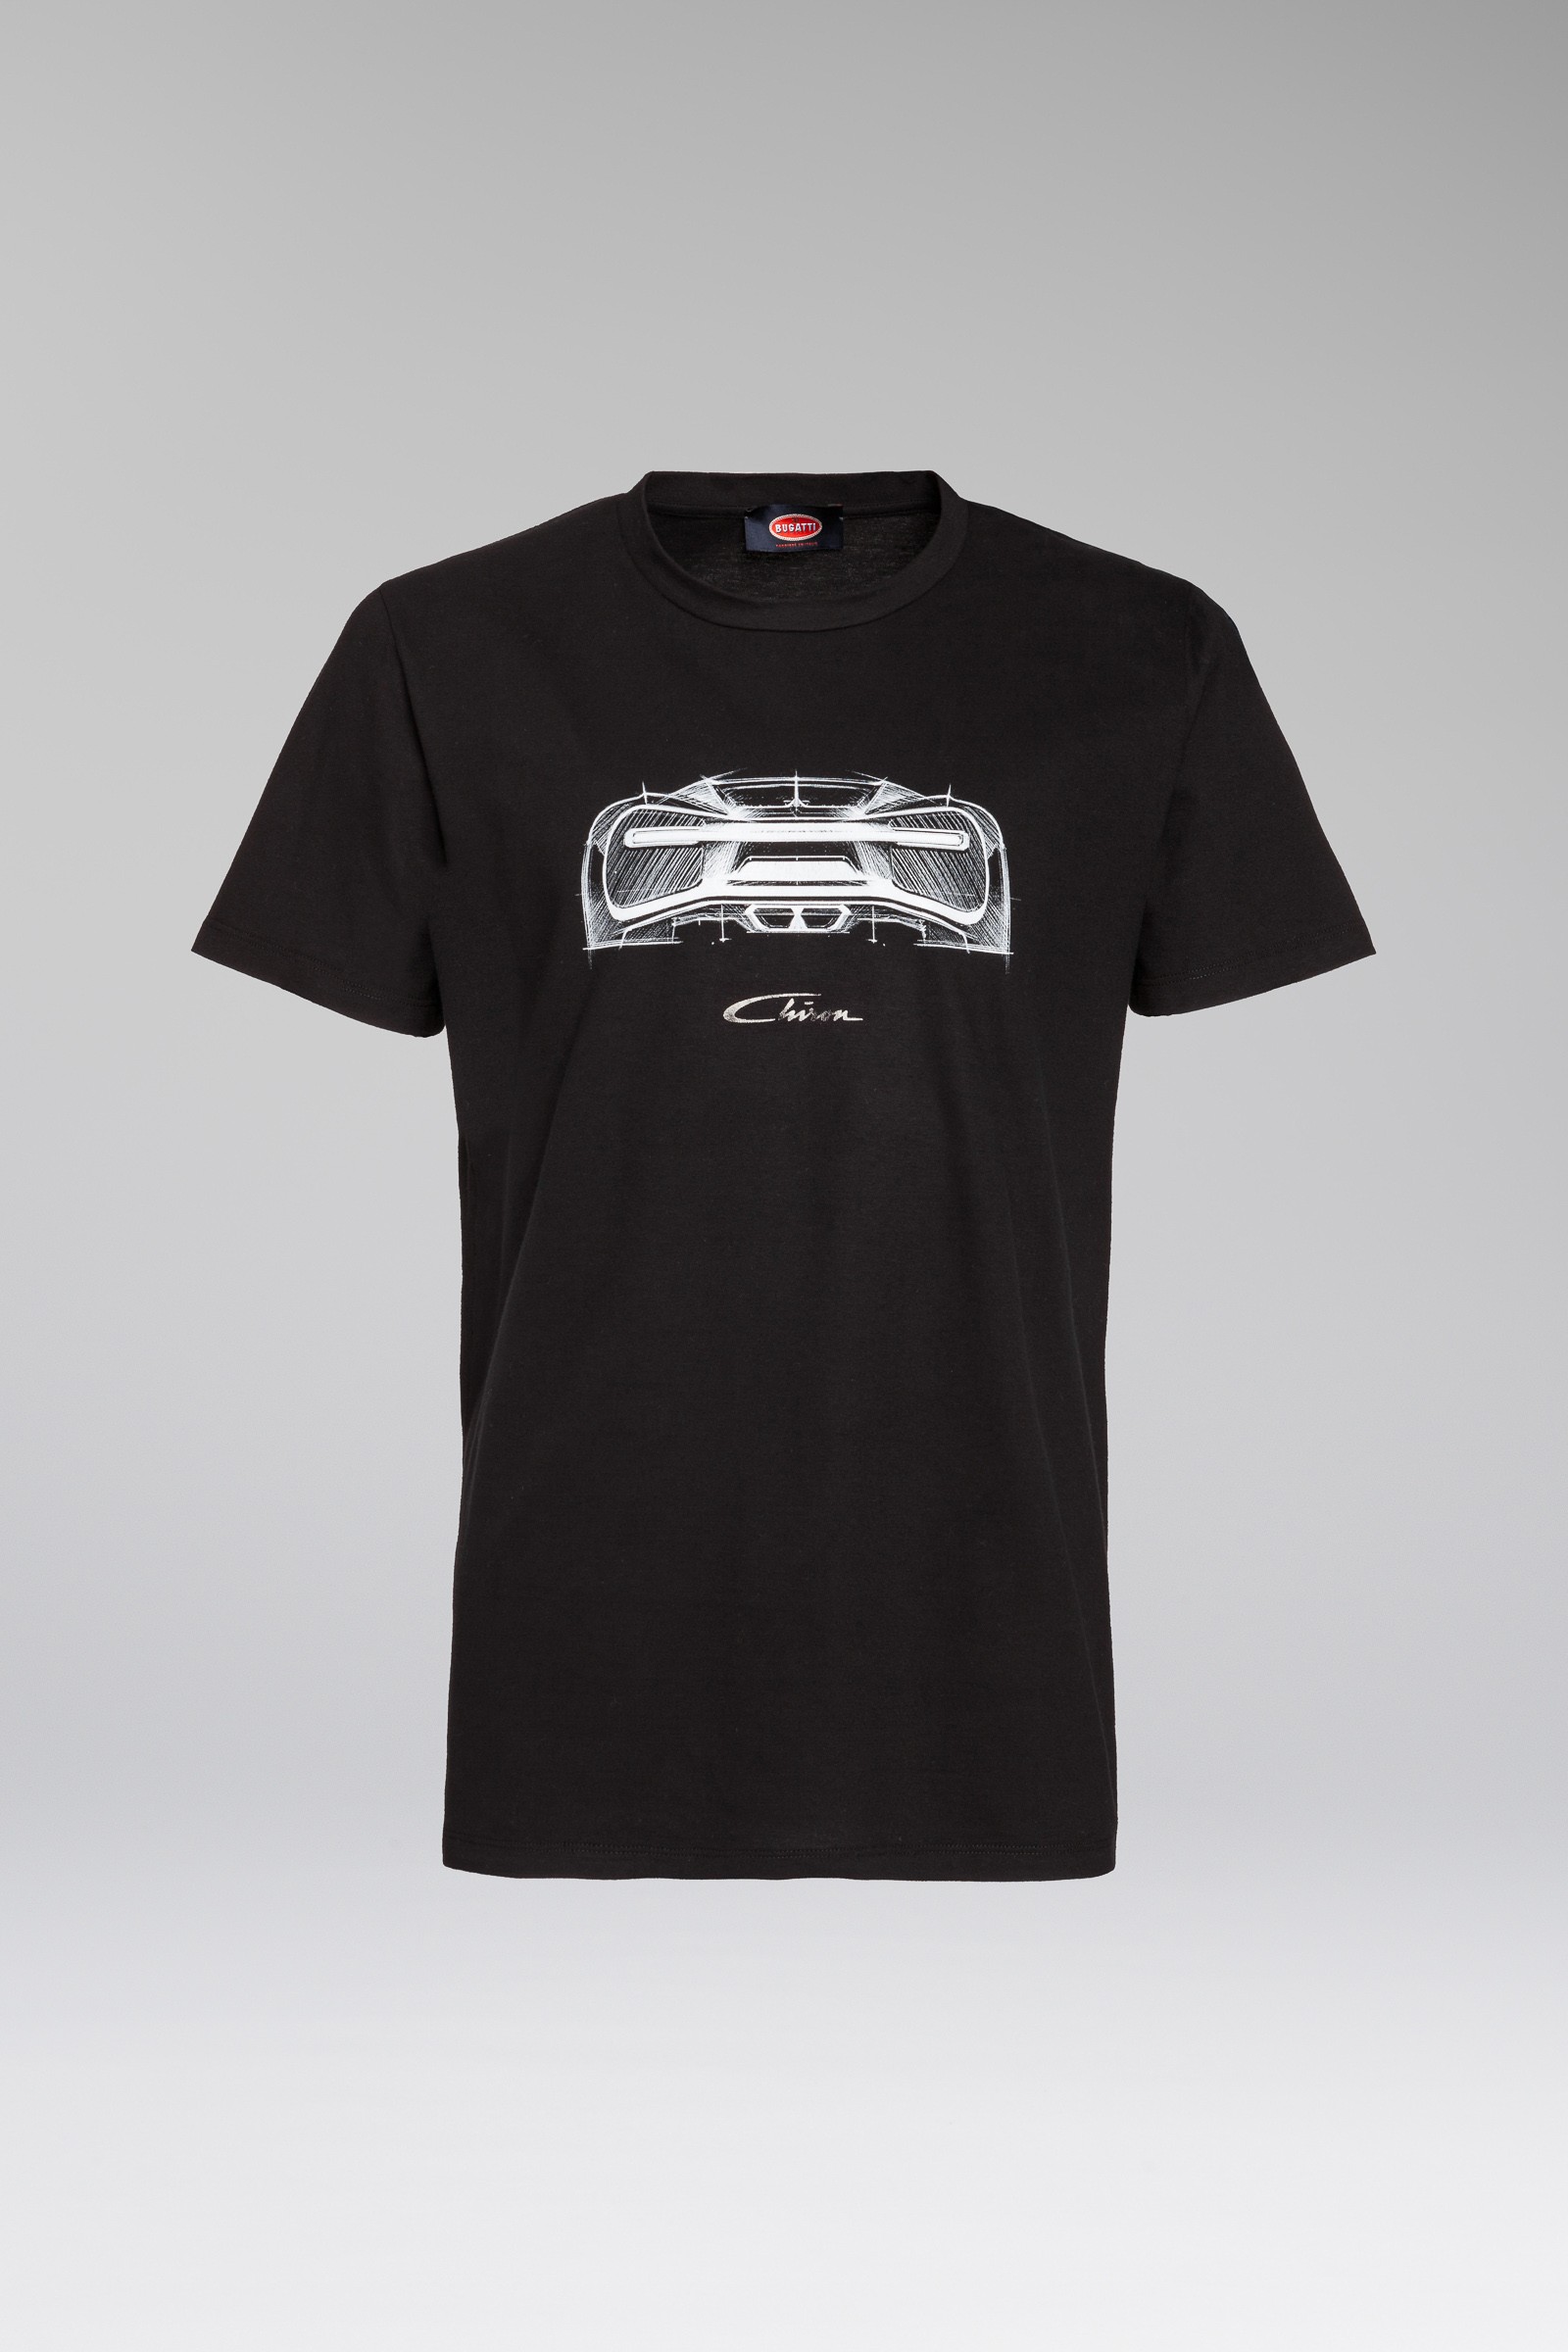 Bugatti - Chiron by T-Shirt Black Choice Gear